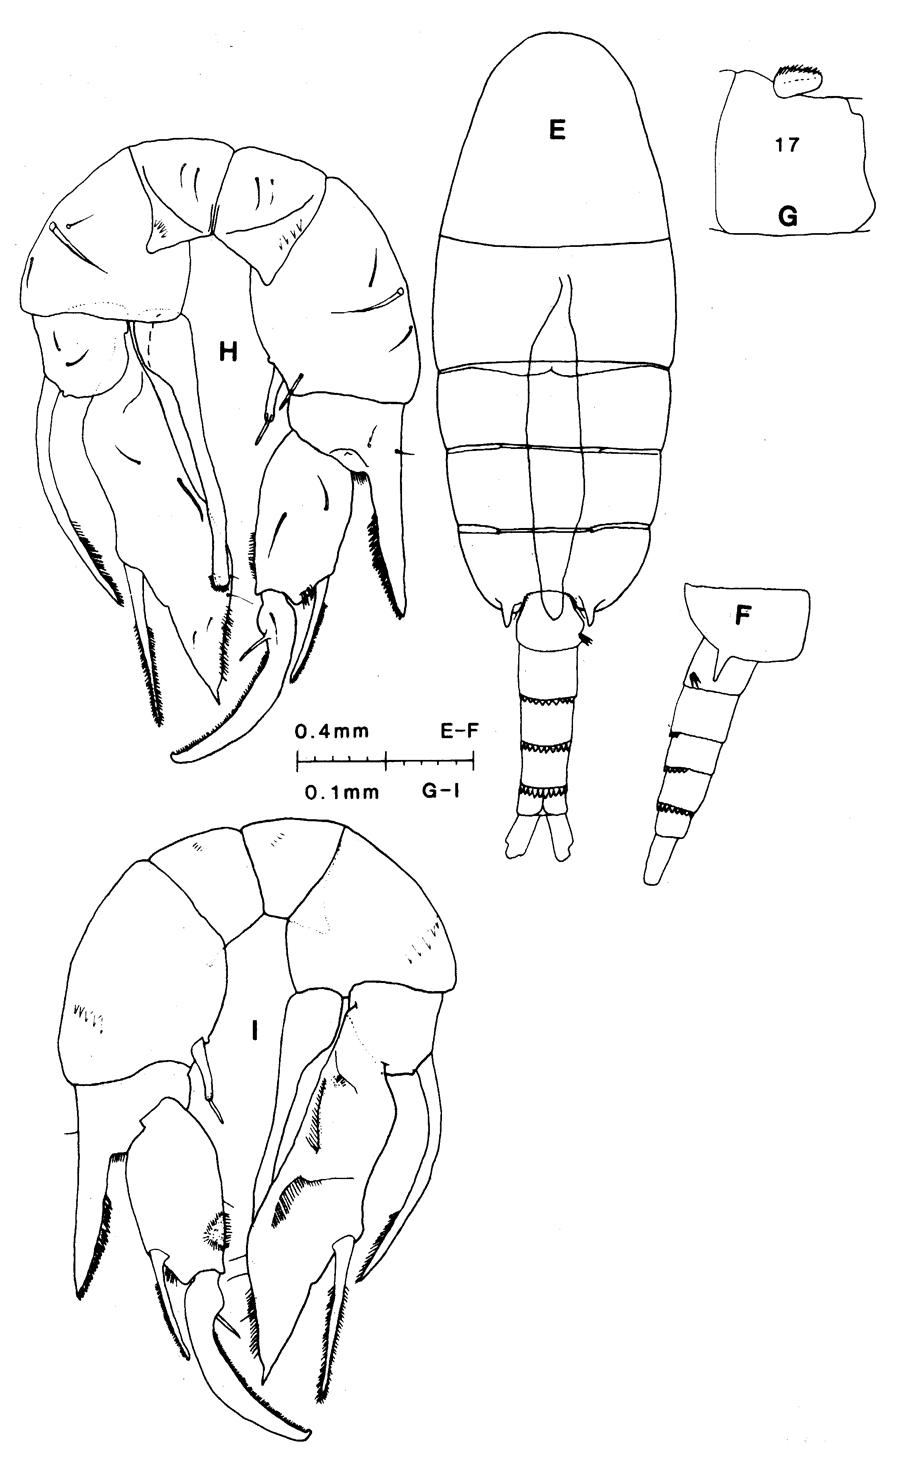 Species Pseudodiaptomus ornatus - Plate 8 of morphological figures